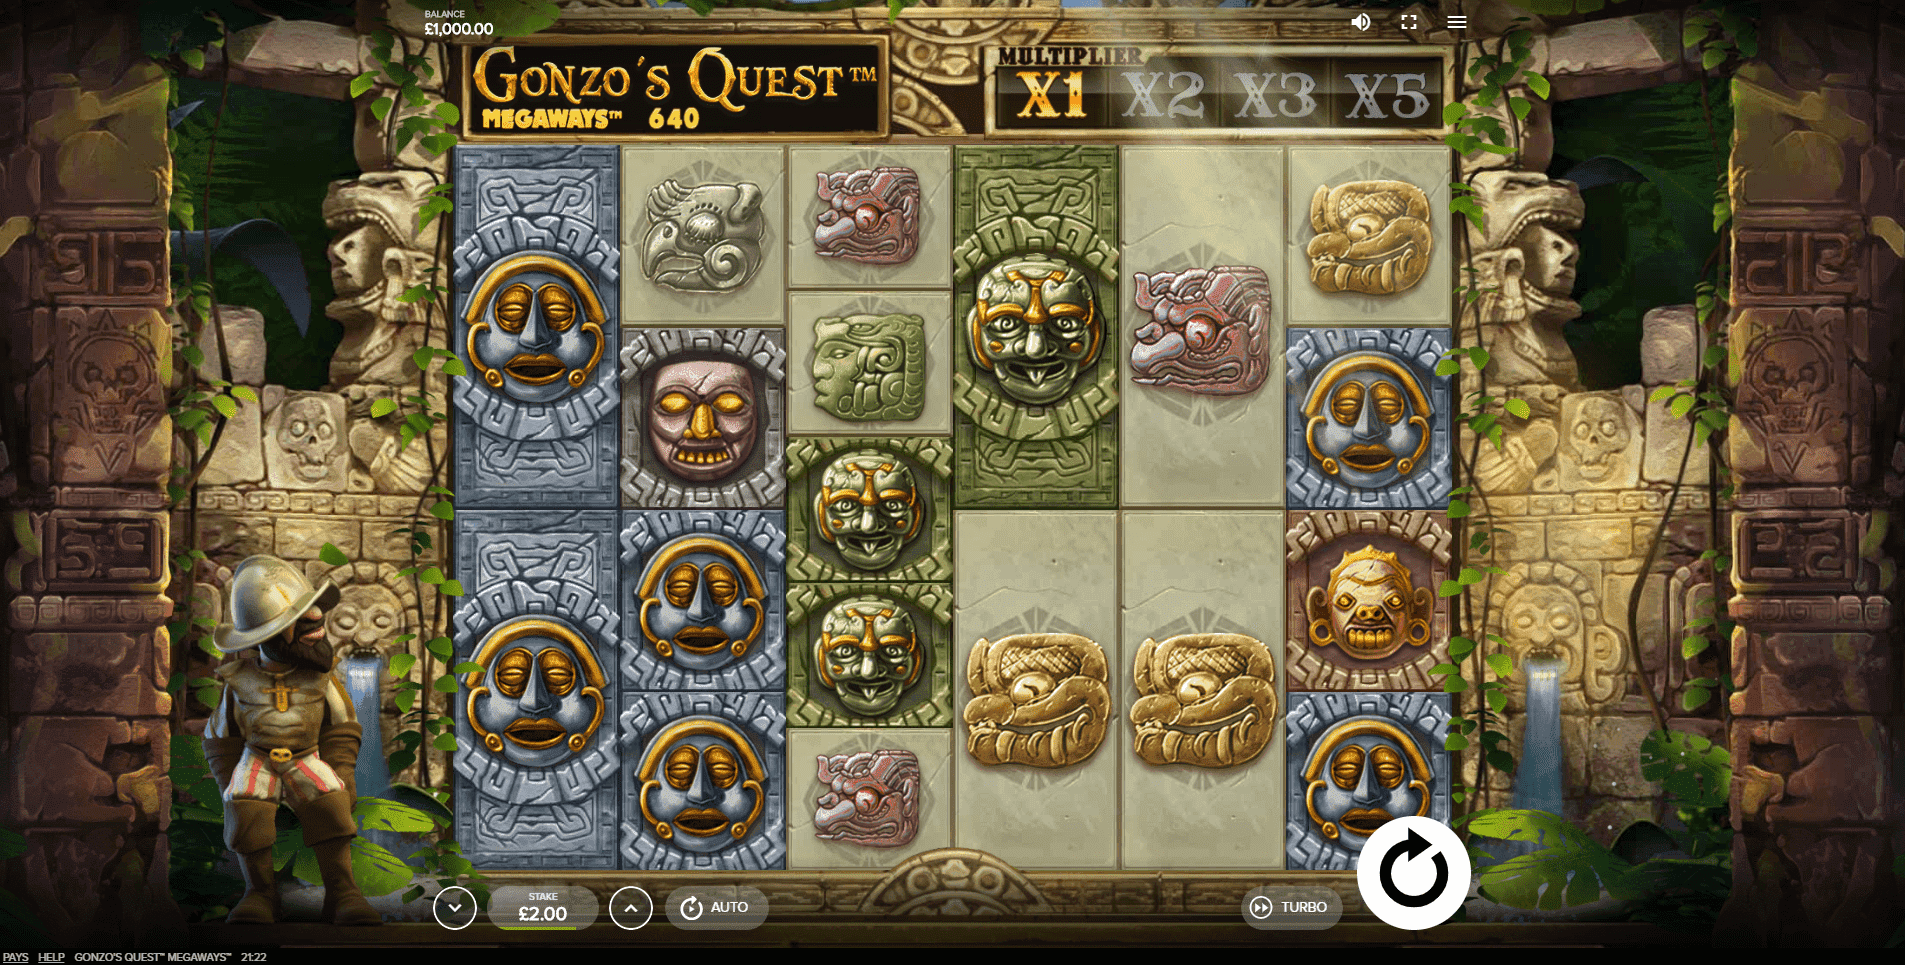 Gonzos Quest Megaways slot play free